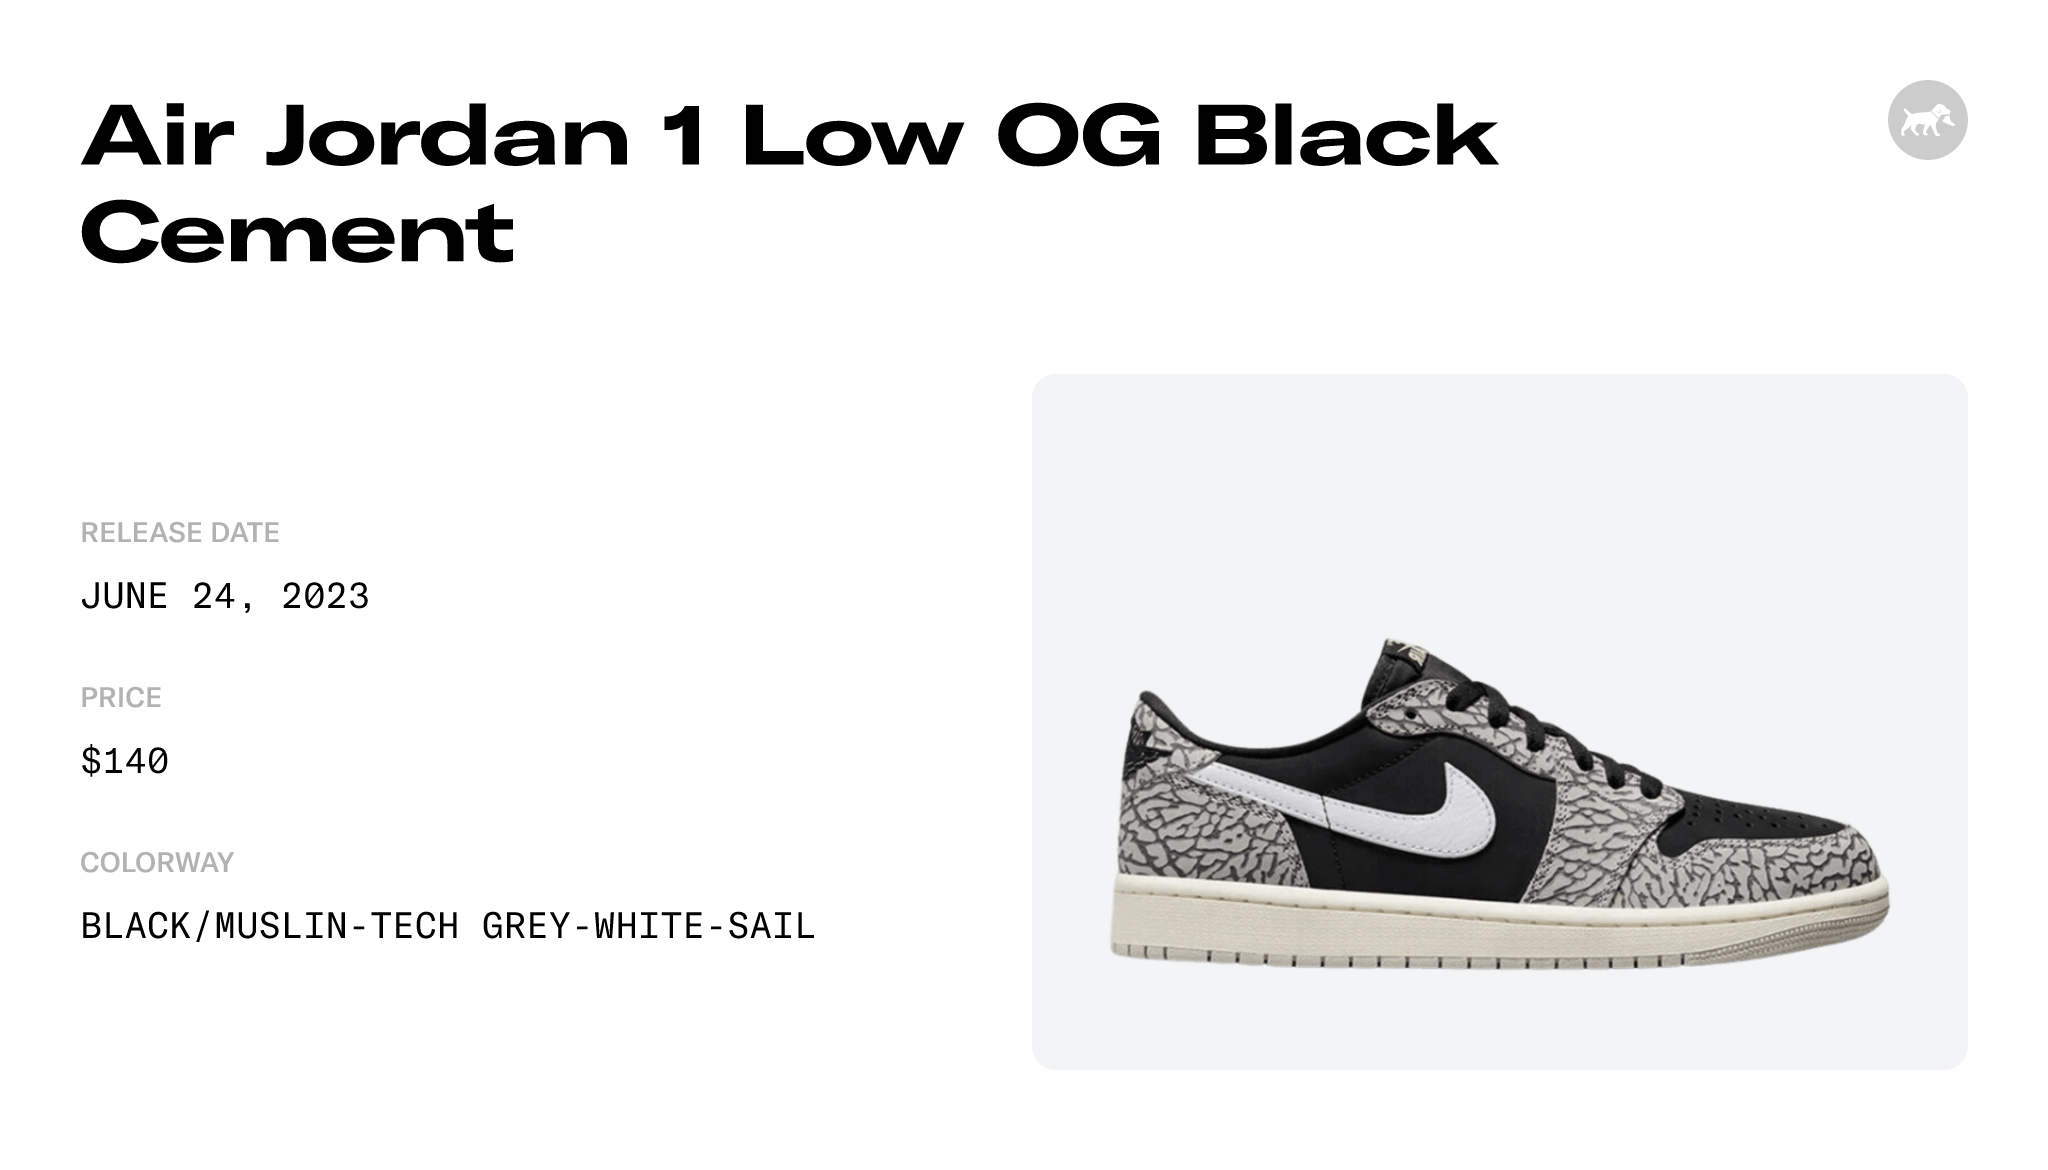 Air Jordan 1 Low OG Black Cement - CZ0790-001 Raffles and Release Date